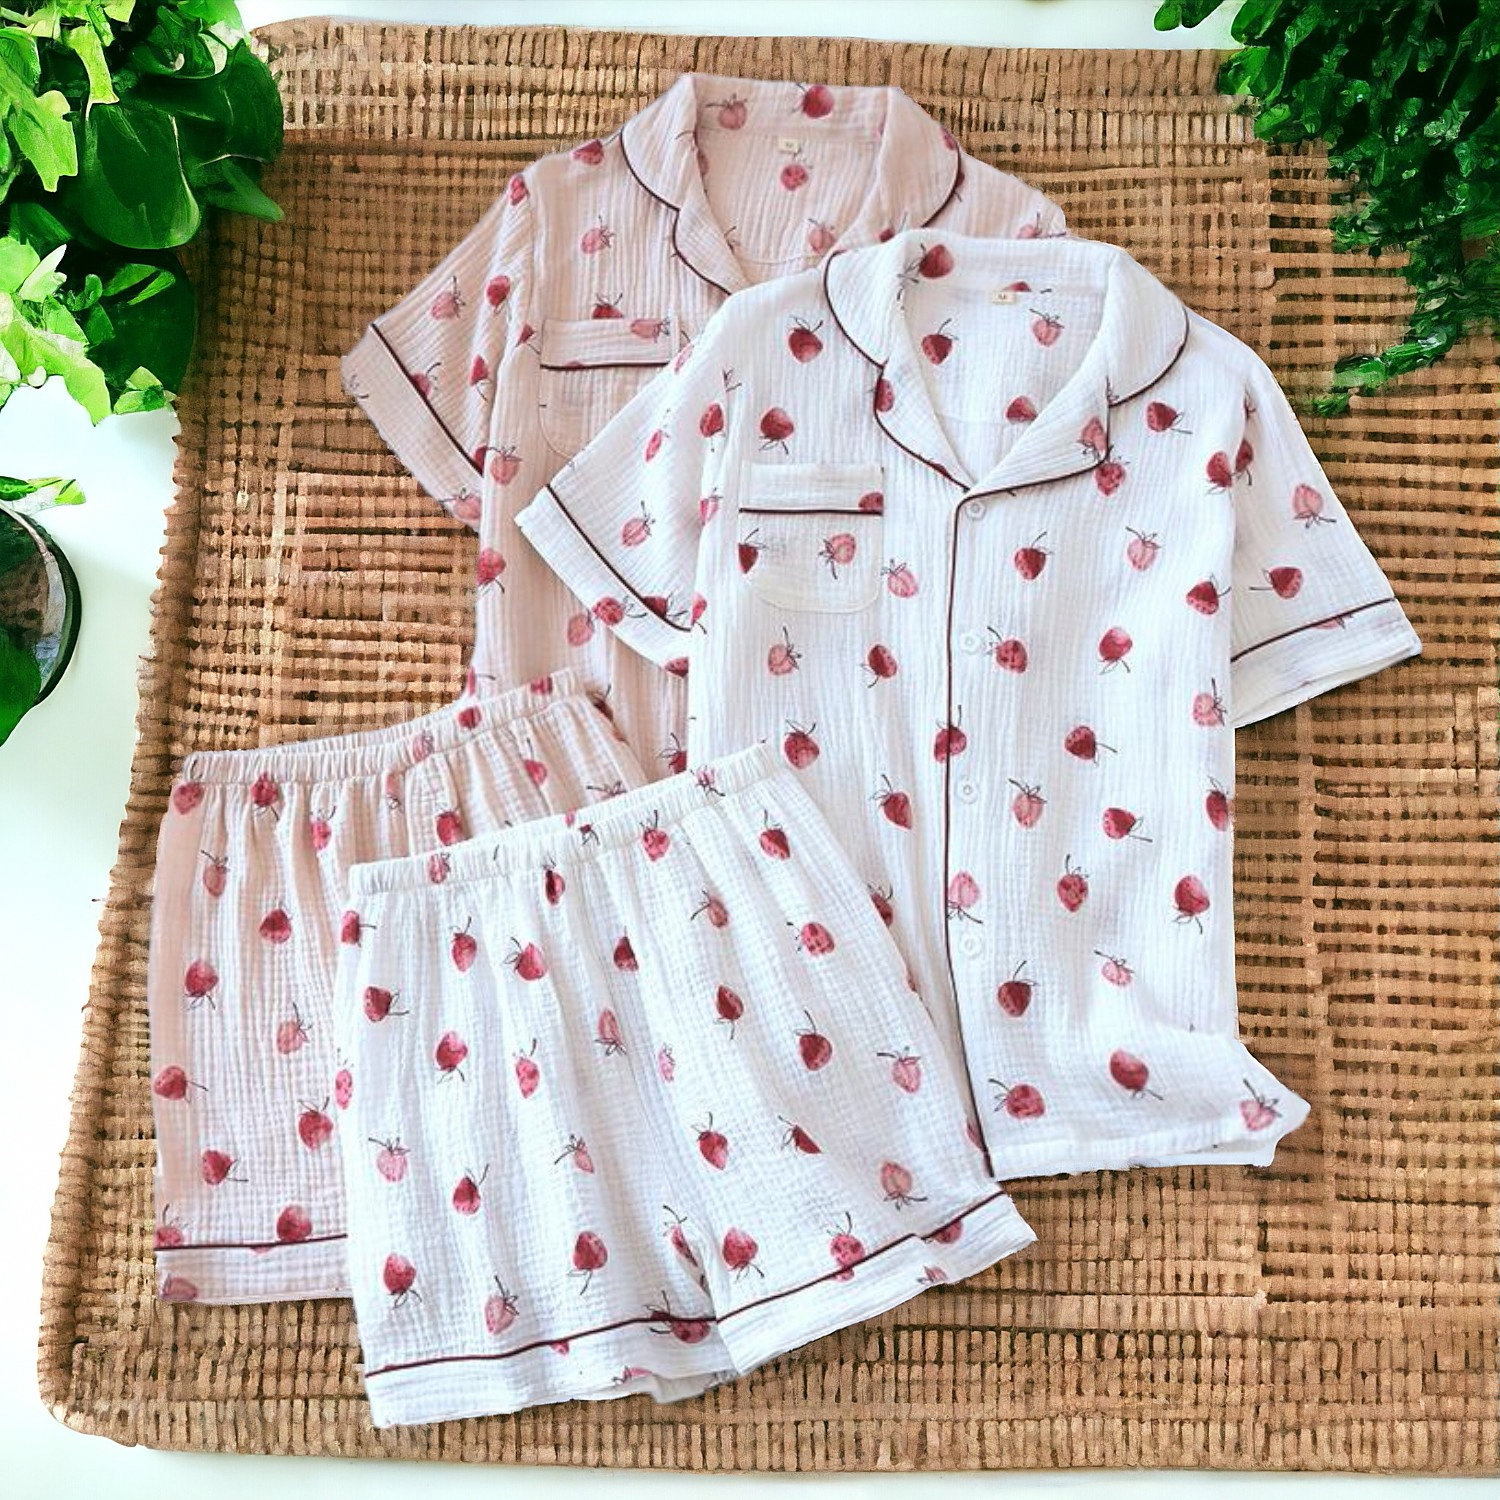 Jilneed Cute Pajama Shorts for Women Strawberry Print Cotton